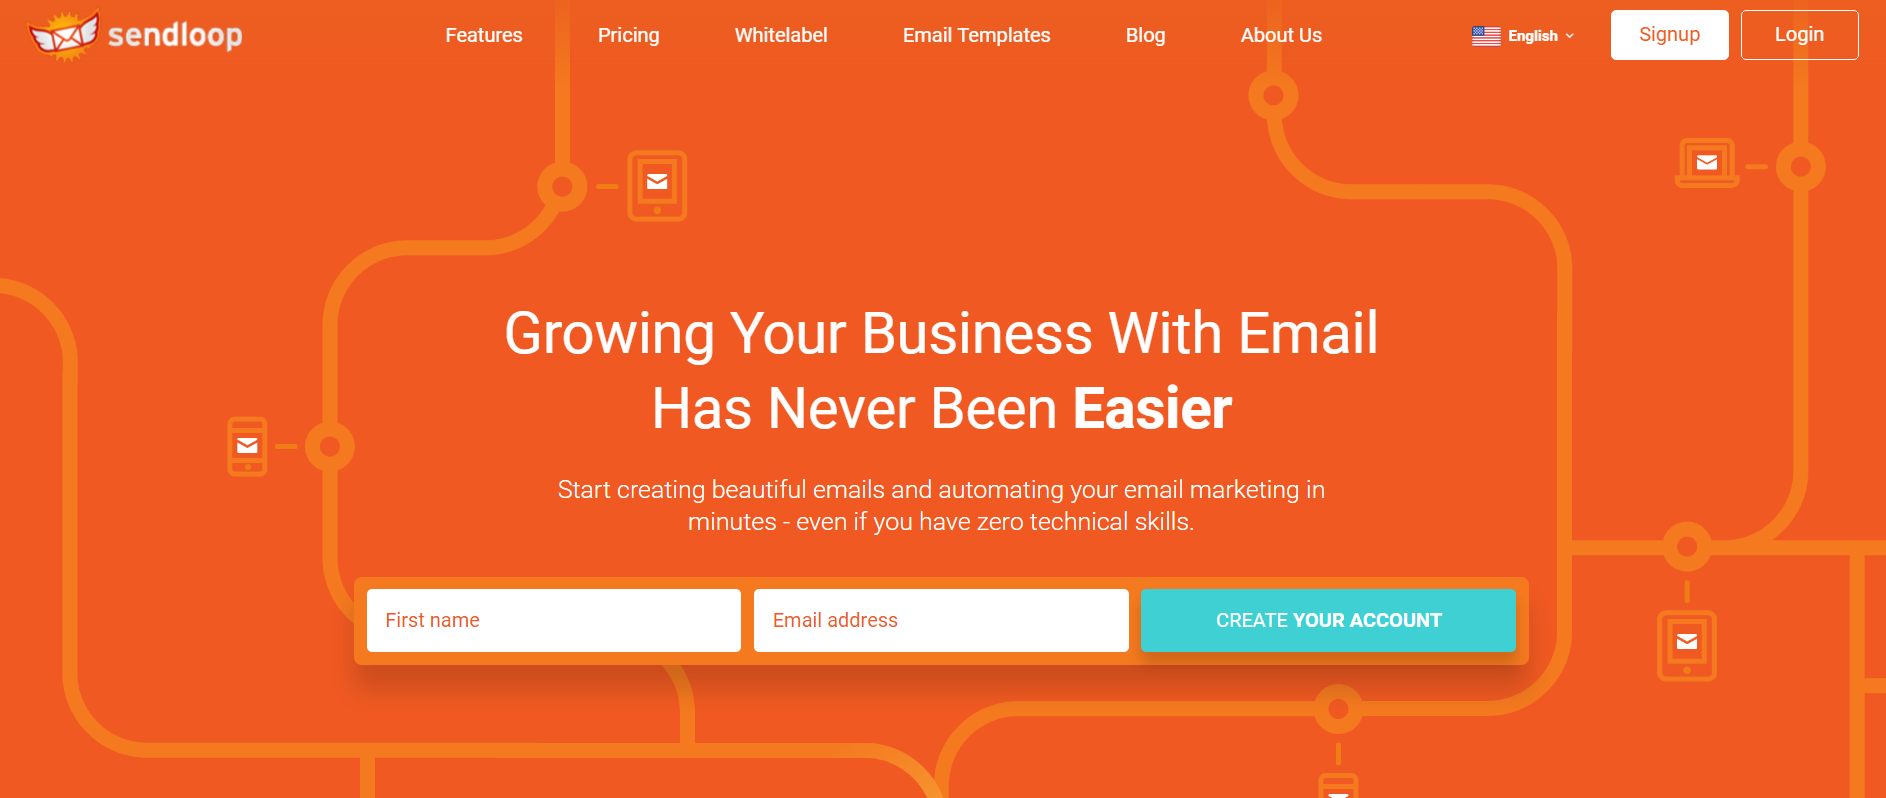 ferramentas-email-marketing-sendloop